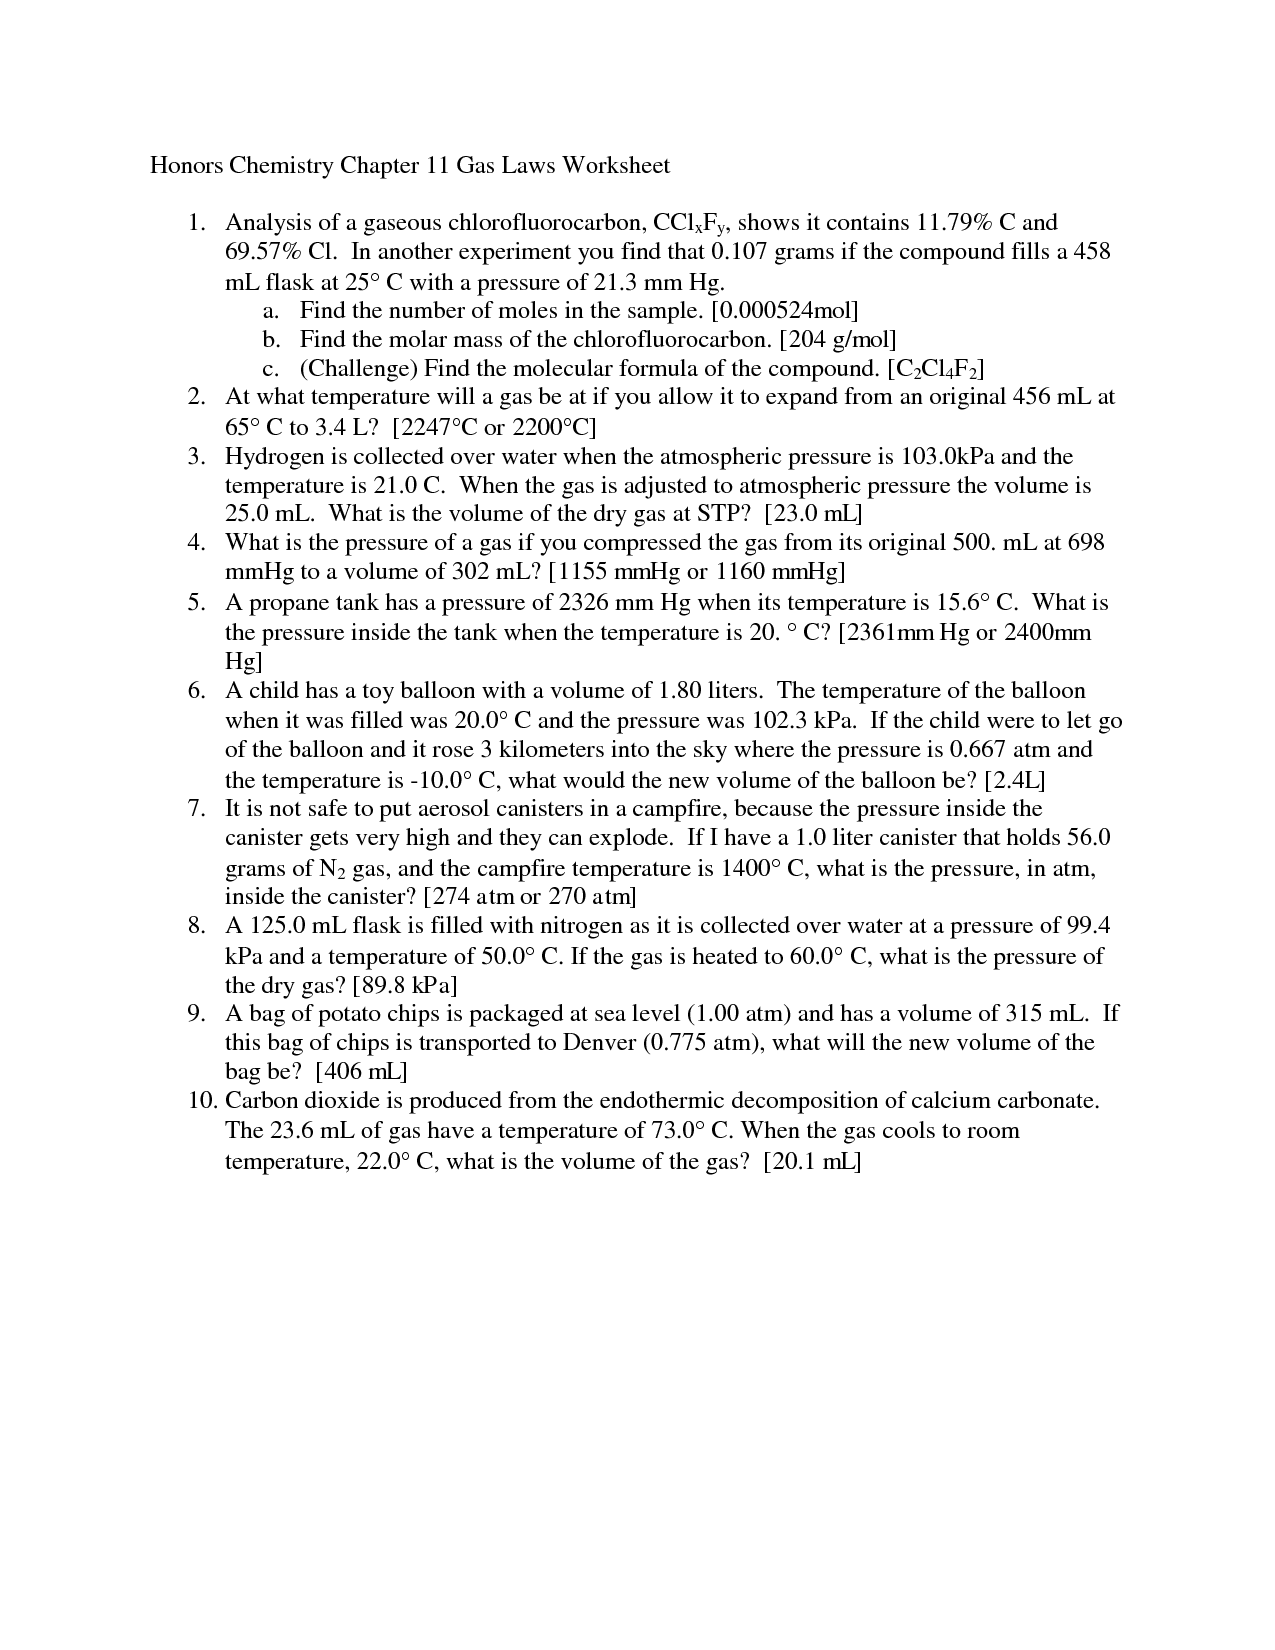 Chapter 11 Worksheet 1 Chemistry Image